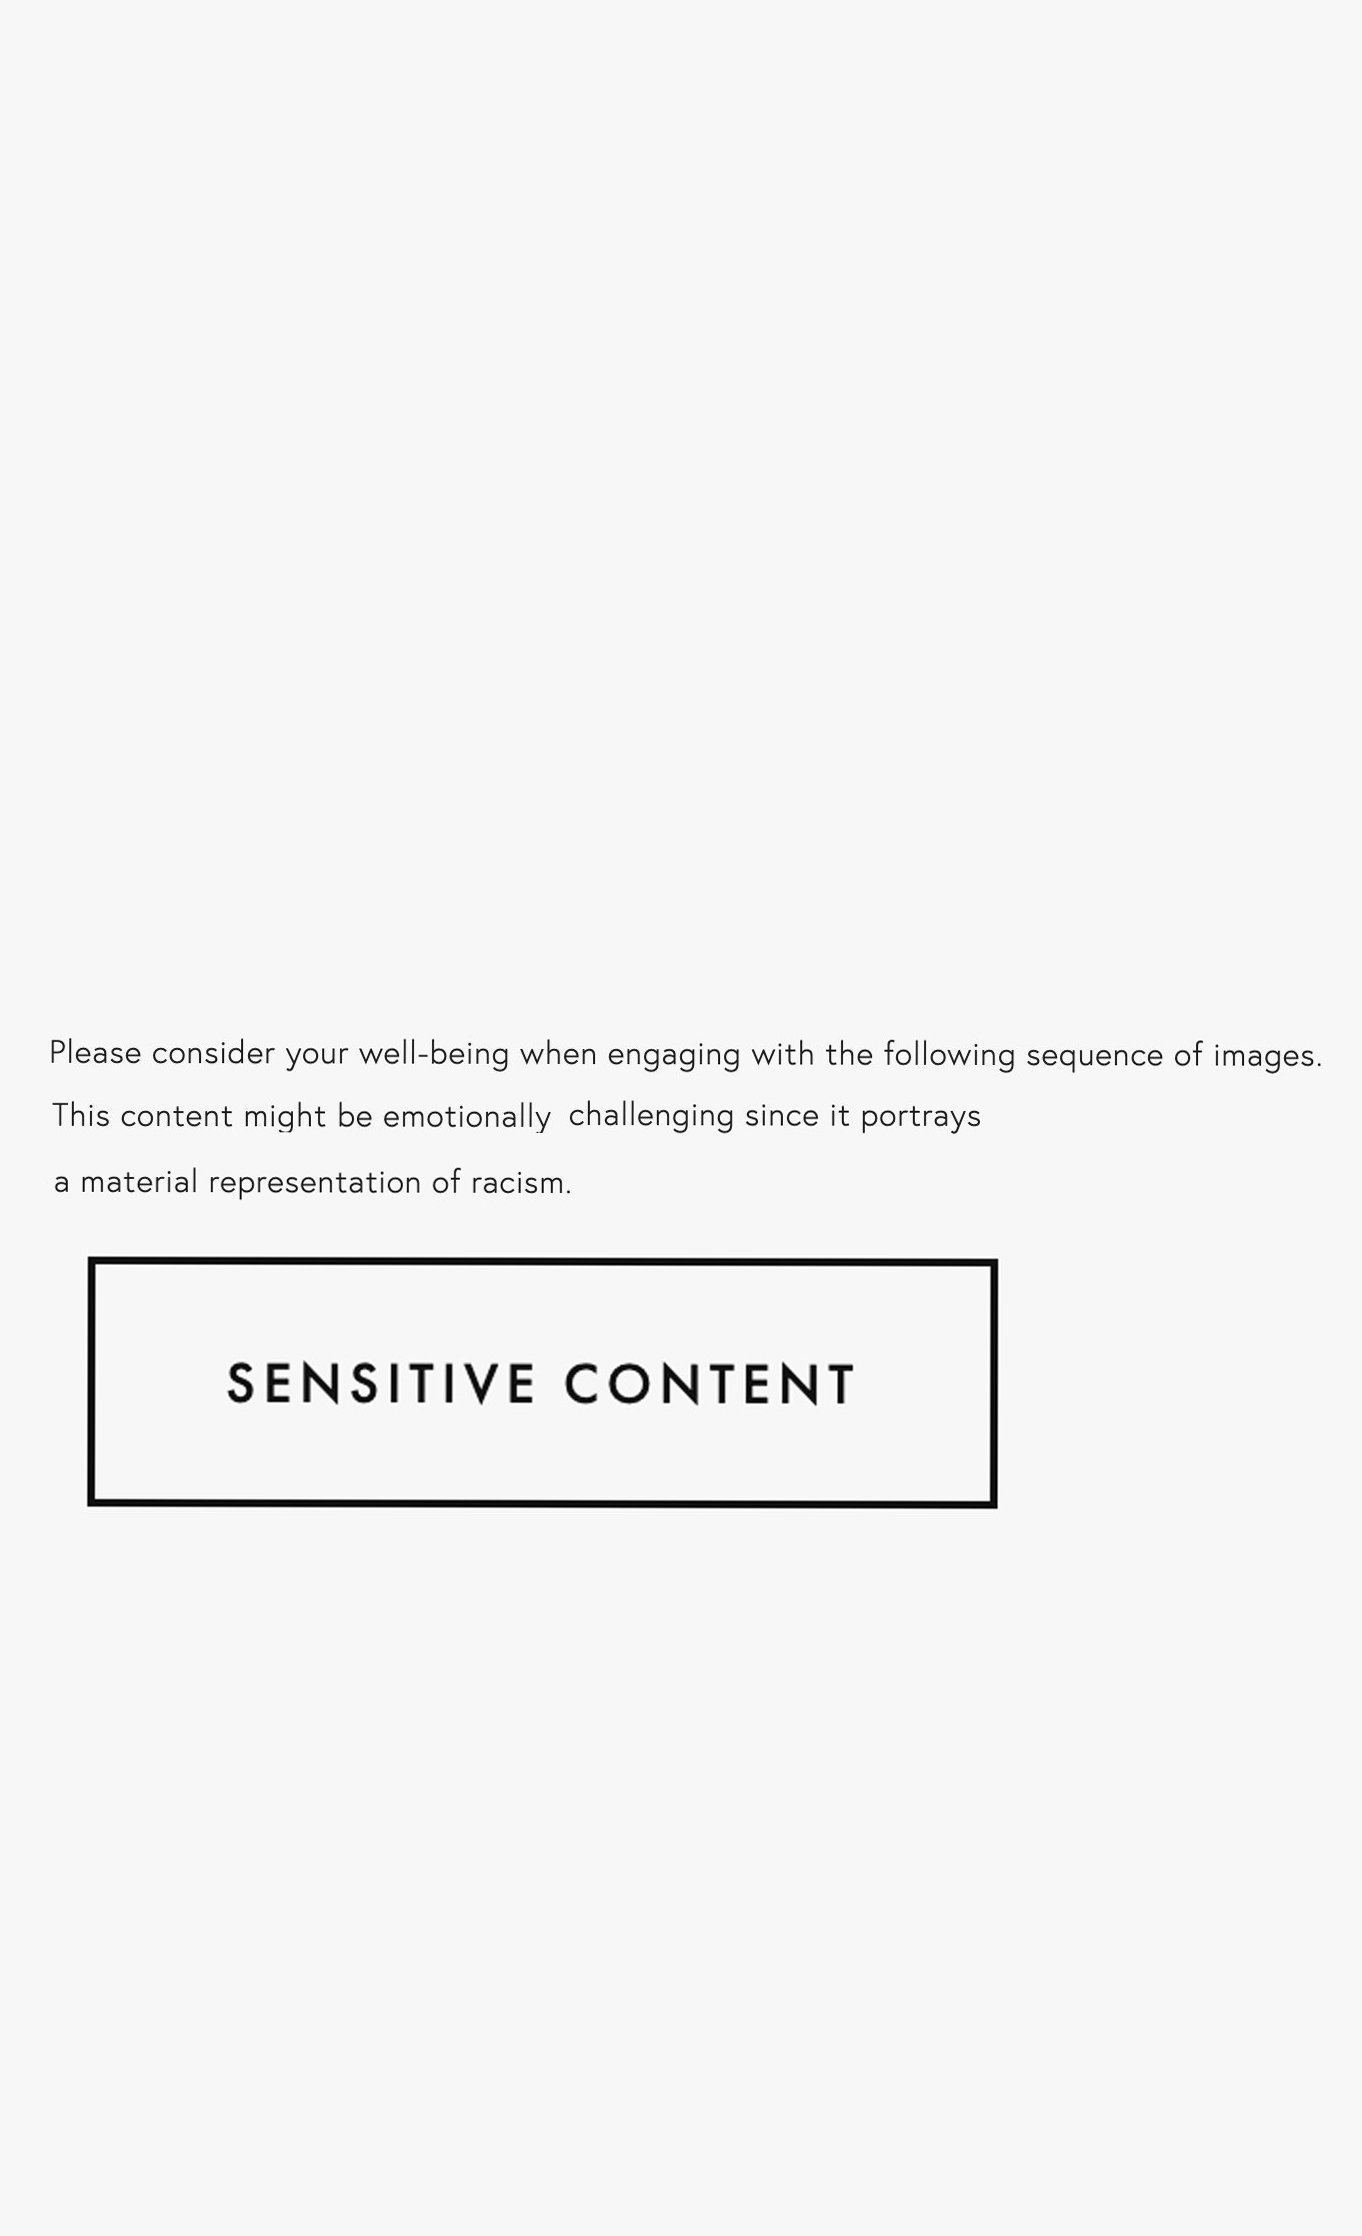 sensitive+content.jpg